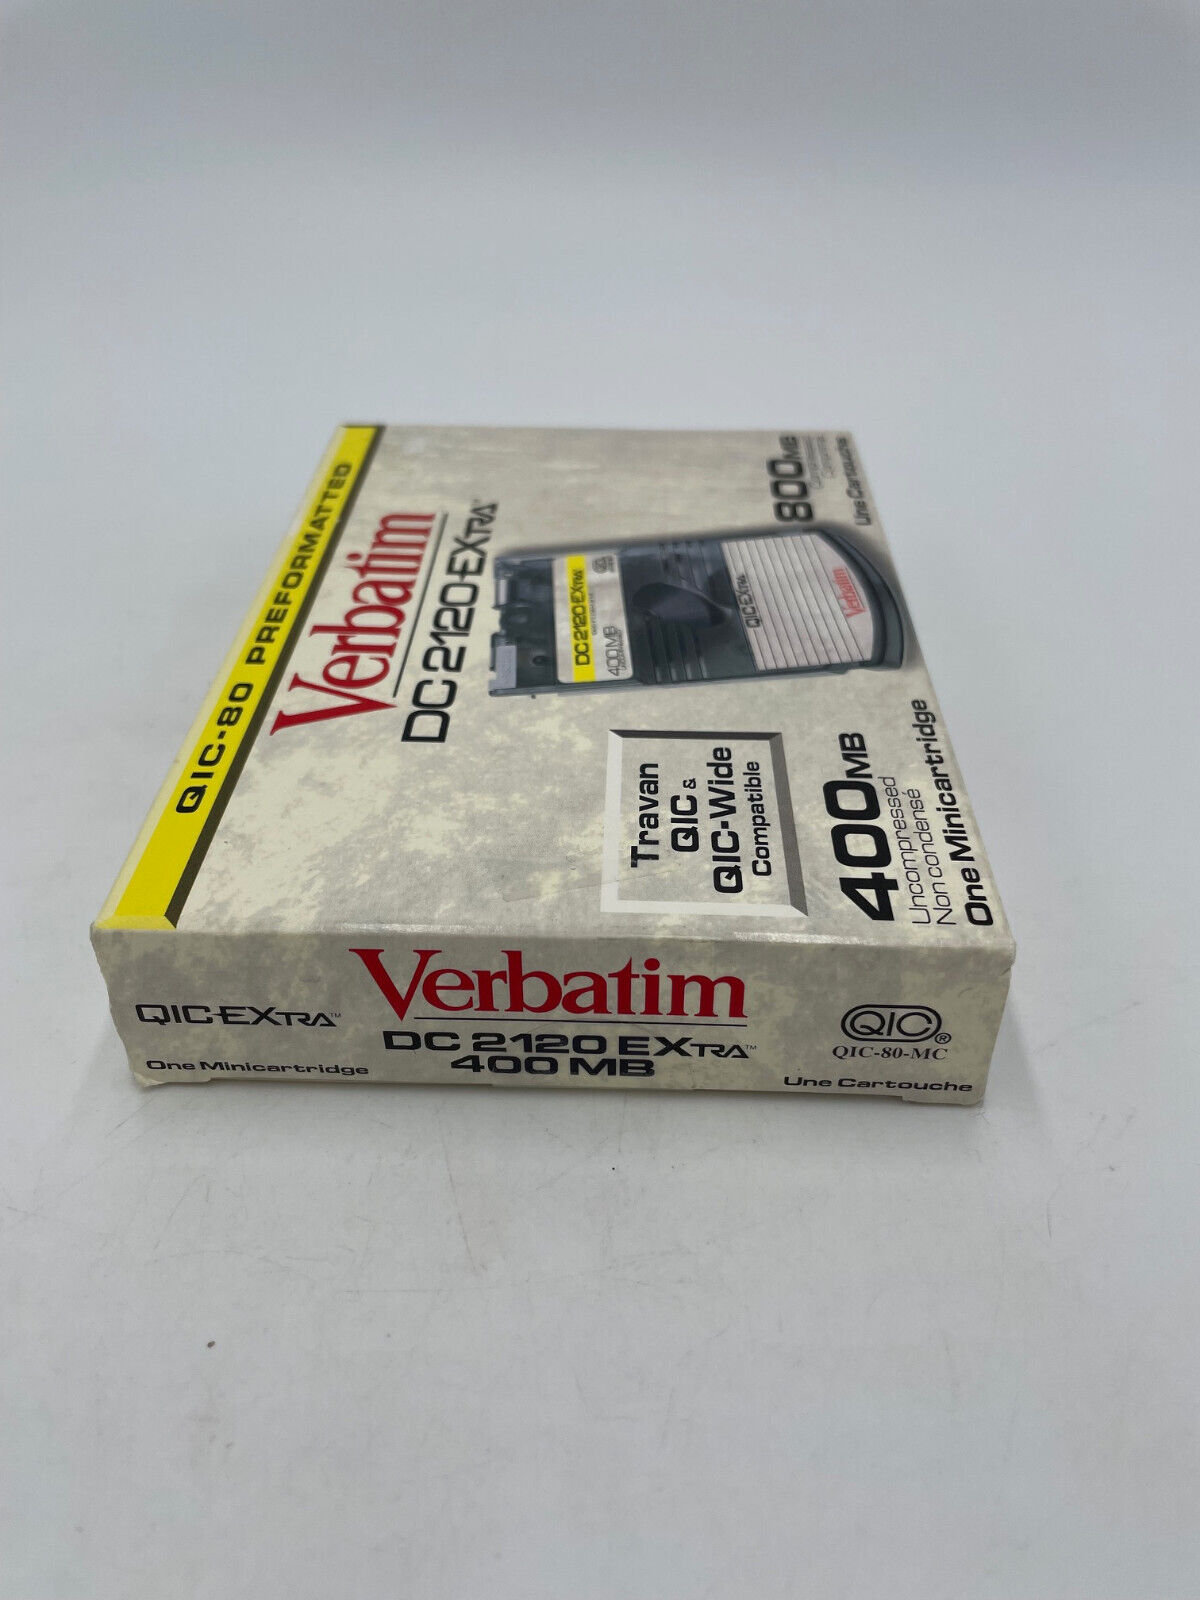 Verbatim DC2120 EXtra QIC-80 400/800MB Data Tape Minicartridge New Sealed Box Verbatim qic-80-mc - фотография #2